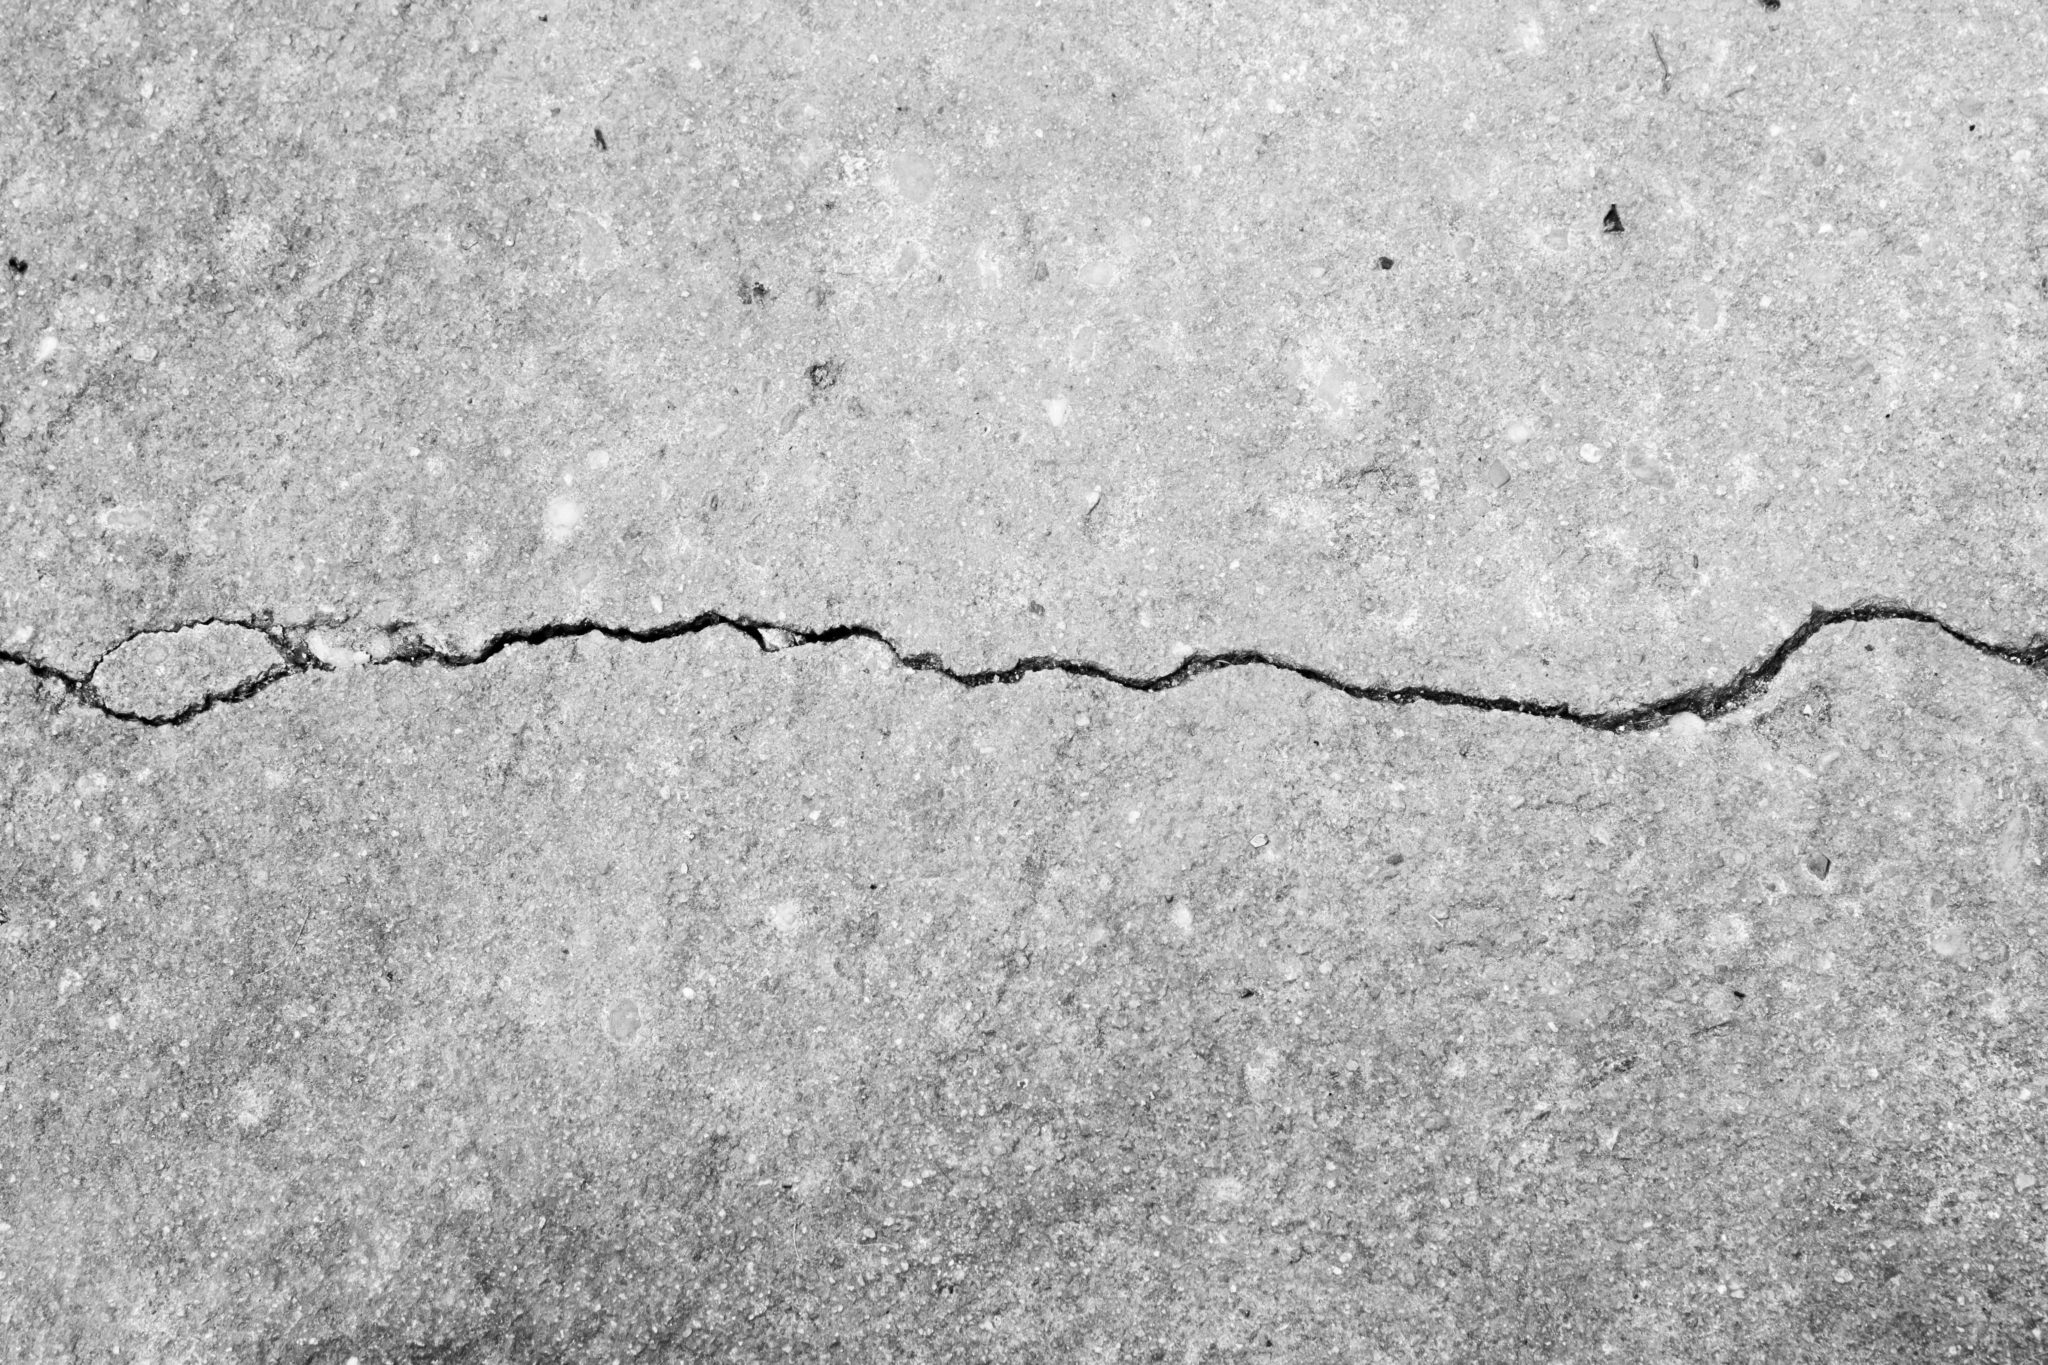 cracked concrete curb